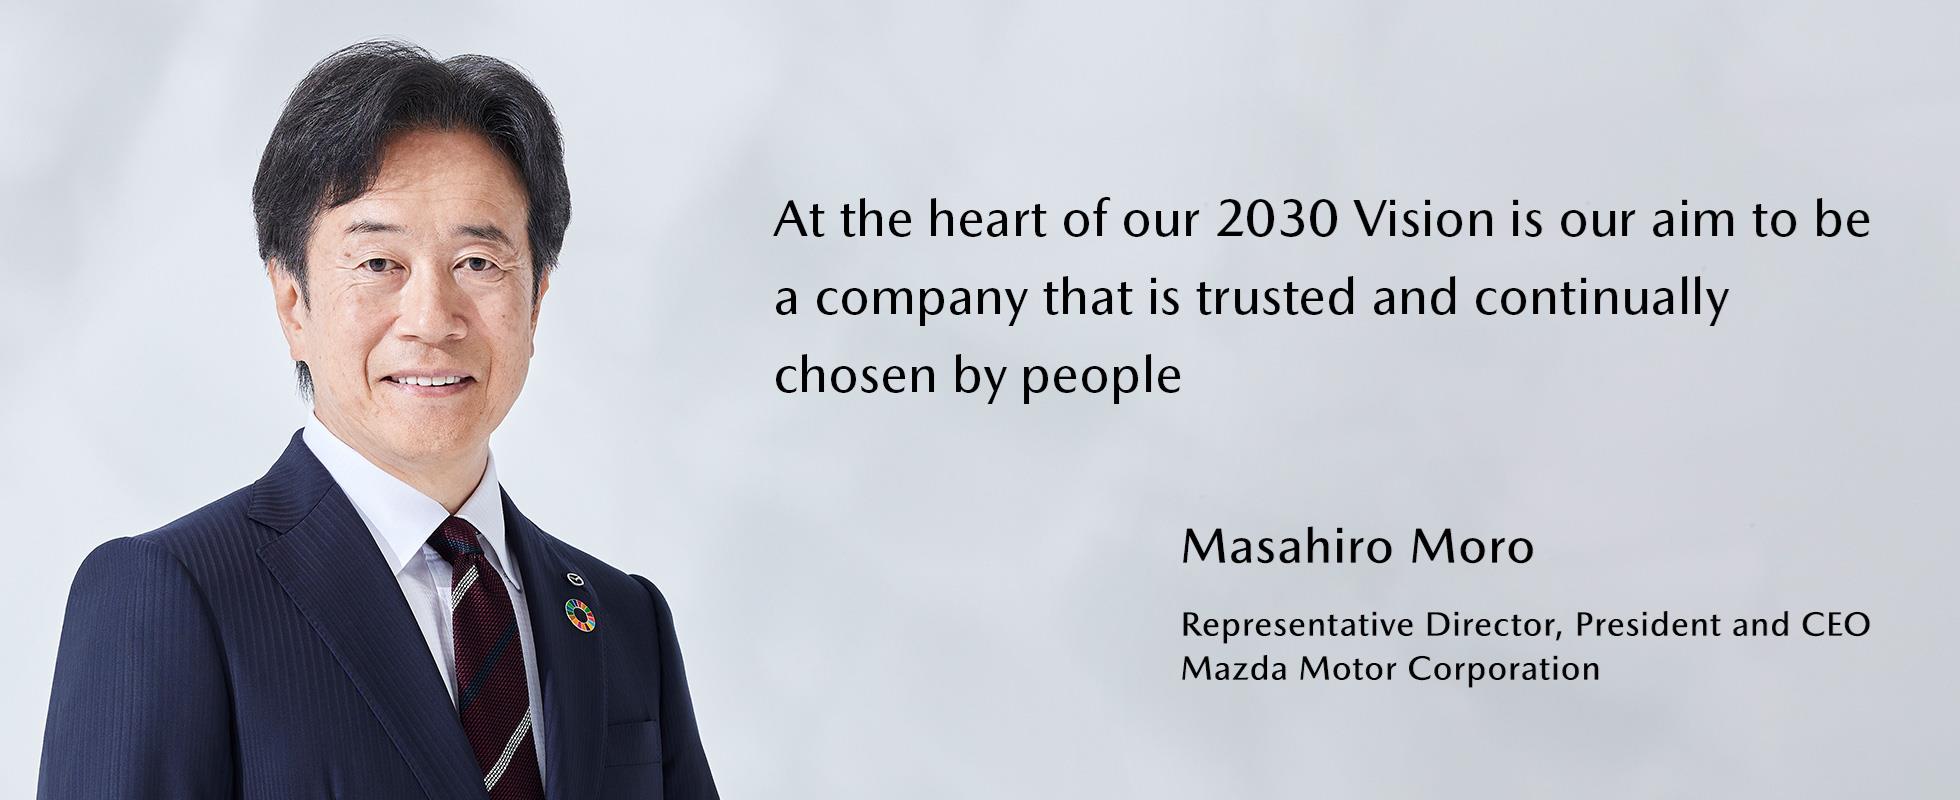 Masahiro Moro Representative Director, President and CEO Mazda Motor Corporation